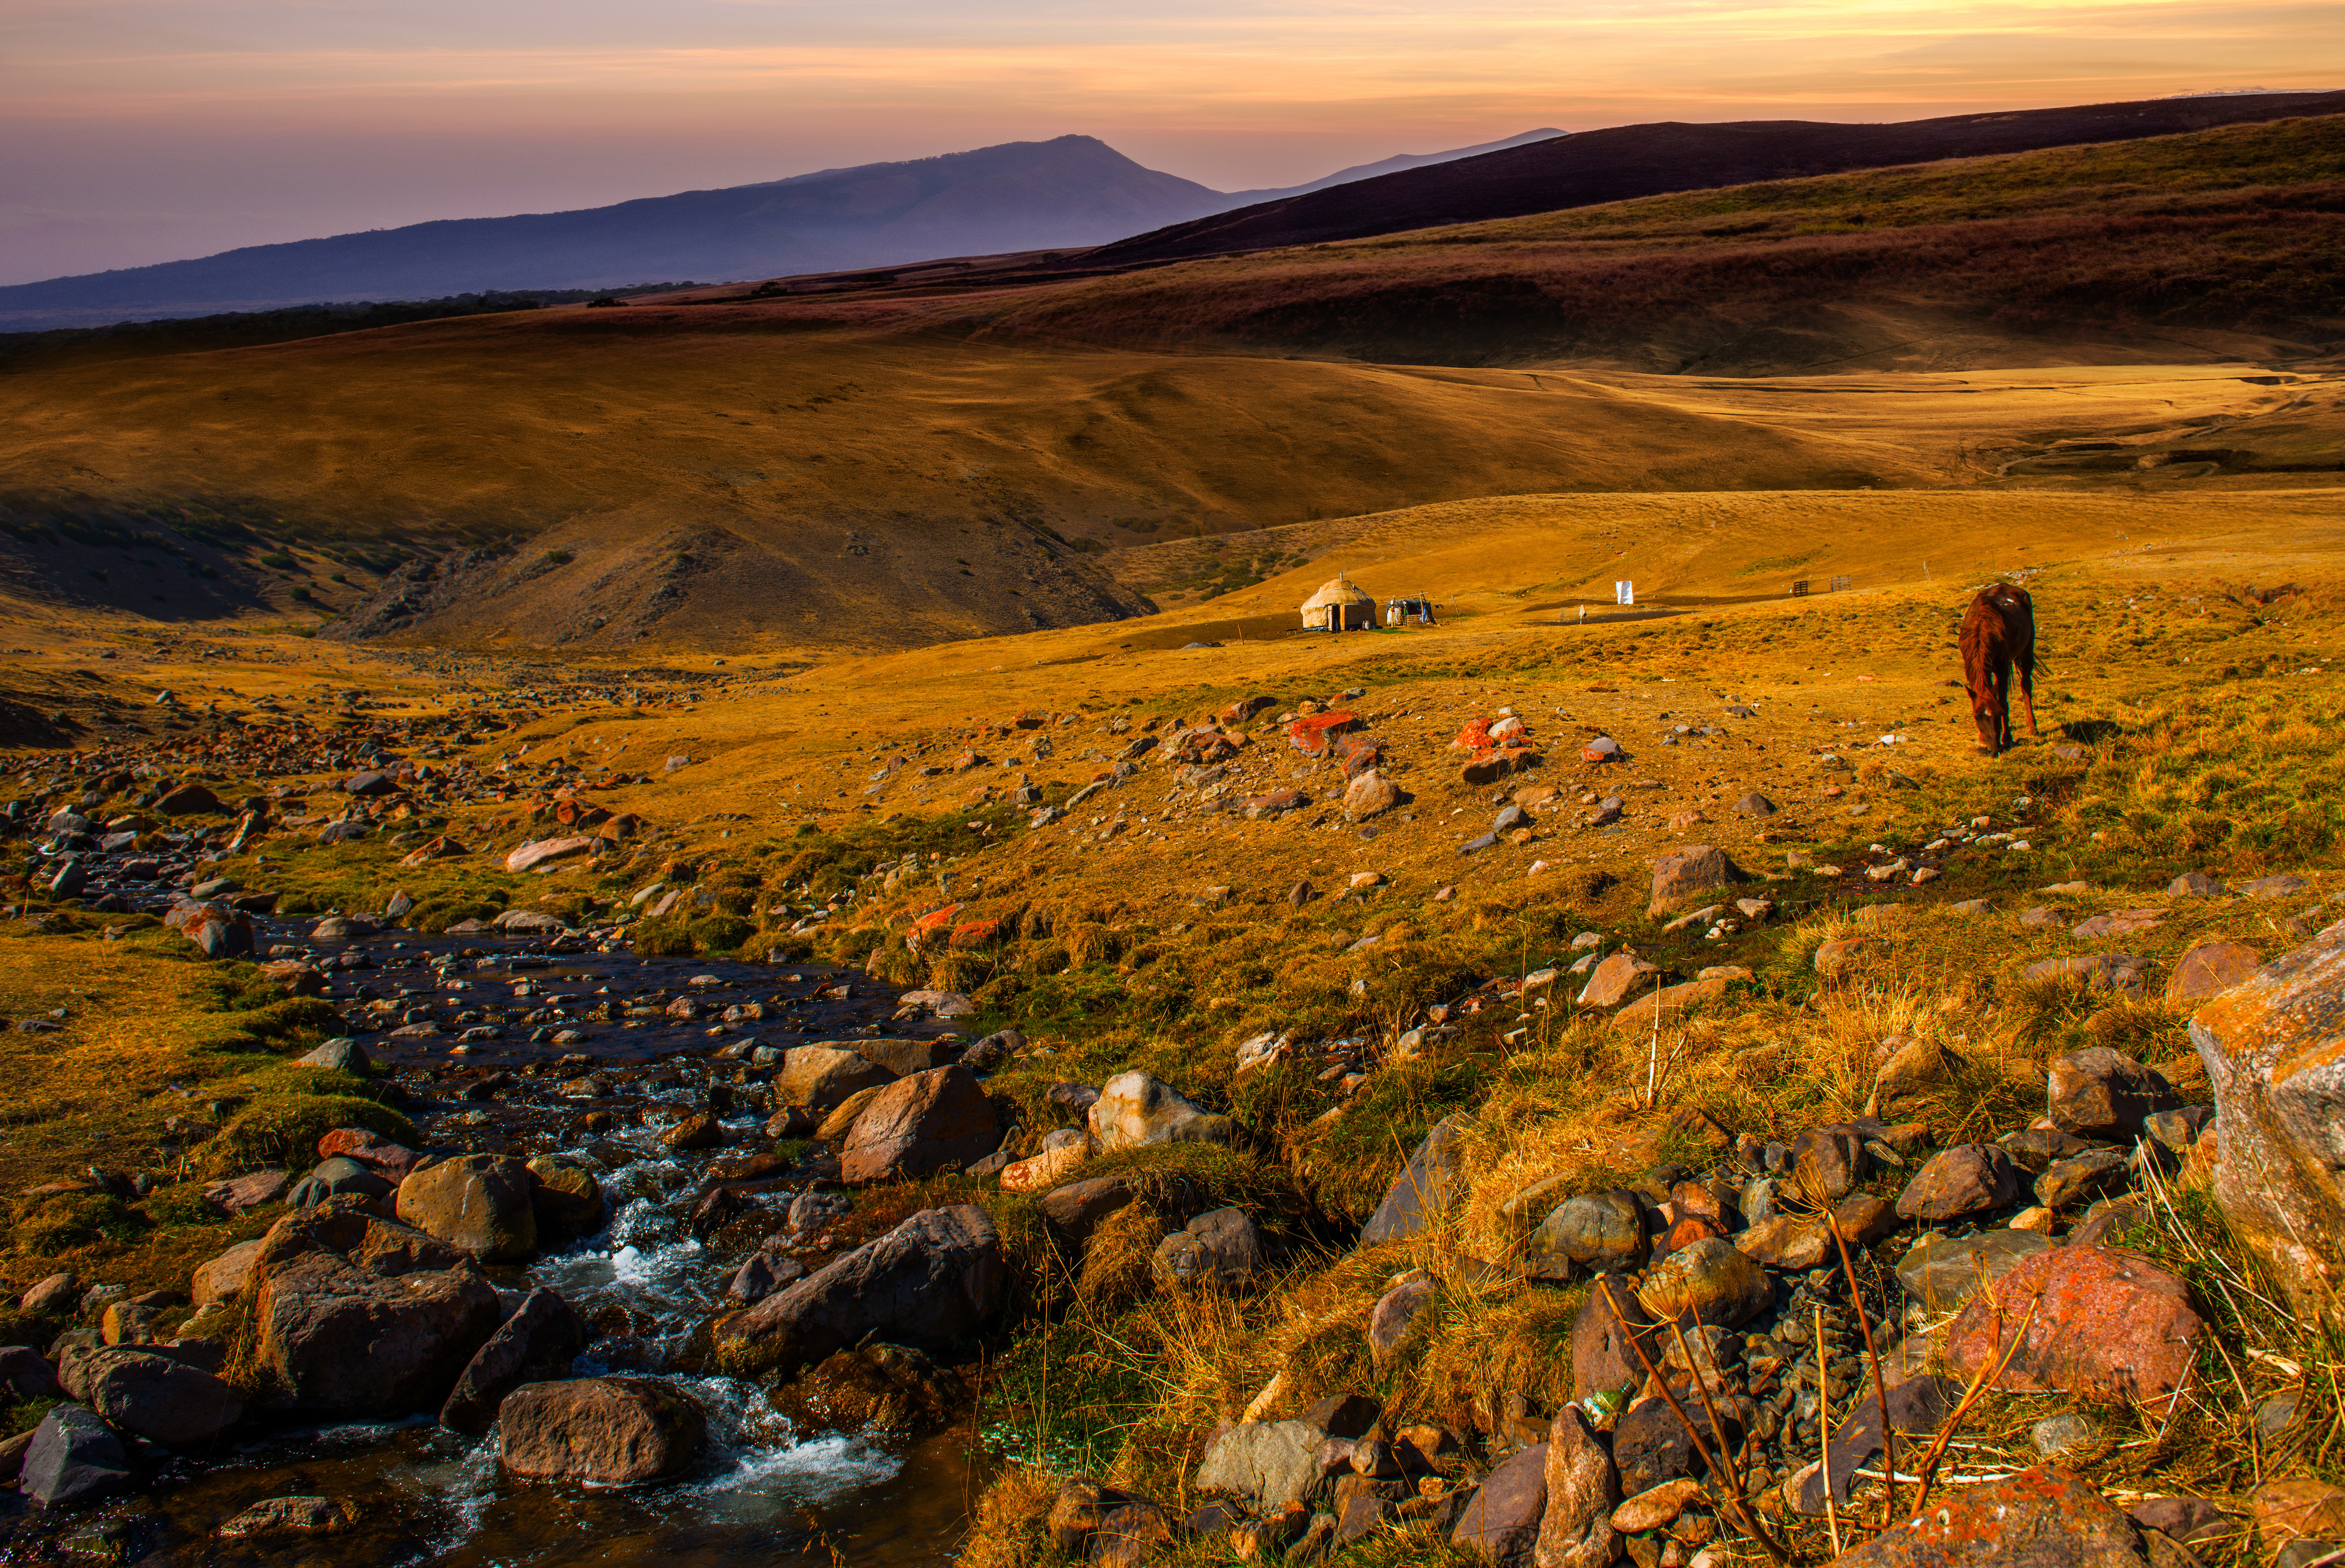 Yurt on the Great Steppe of Kazakhstan © Aureliy / Shutterstock